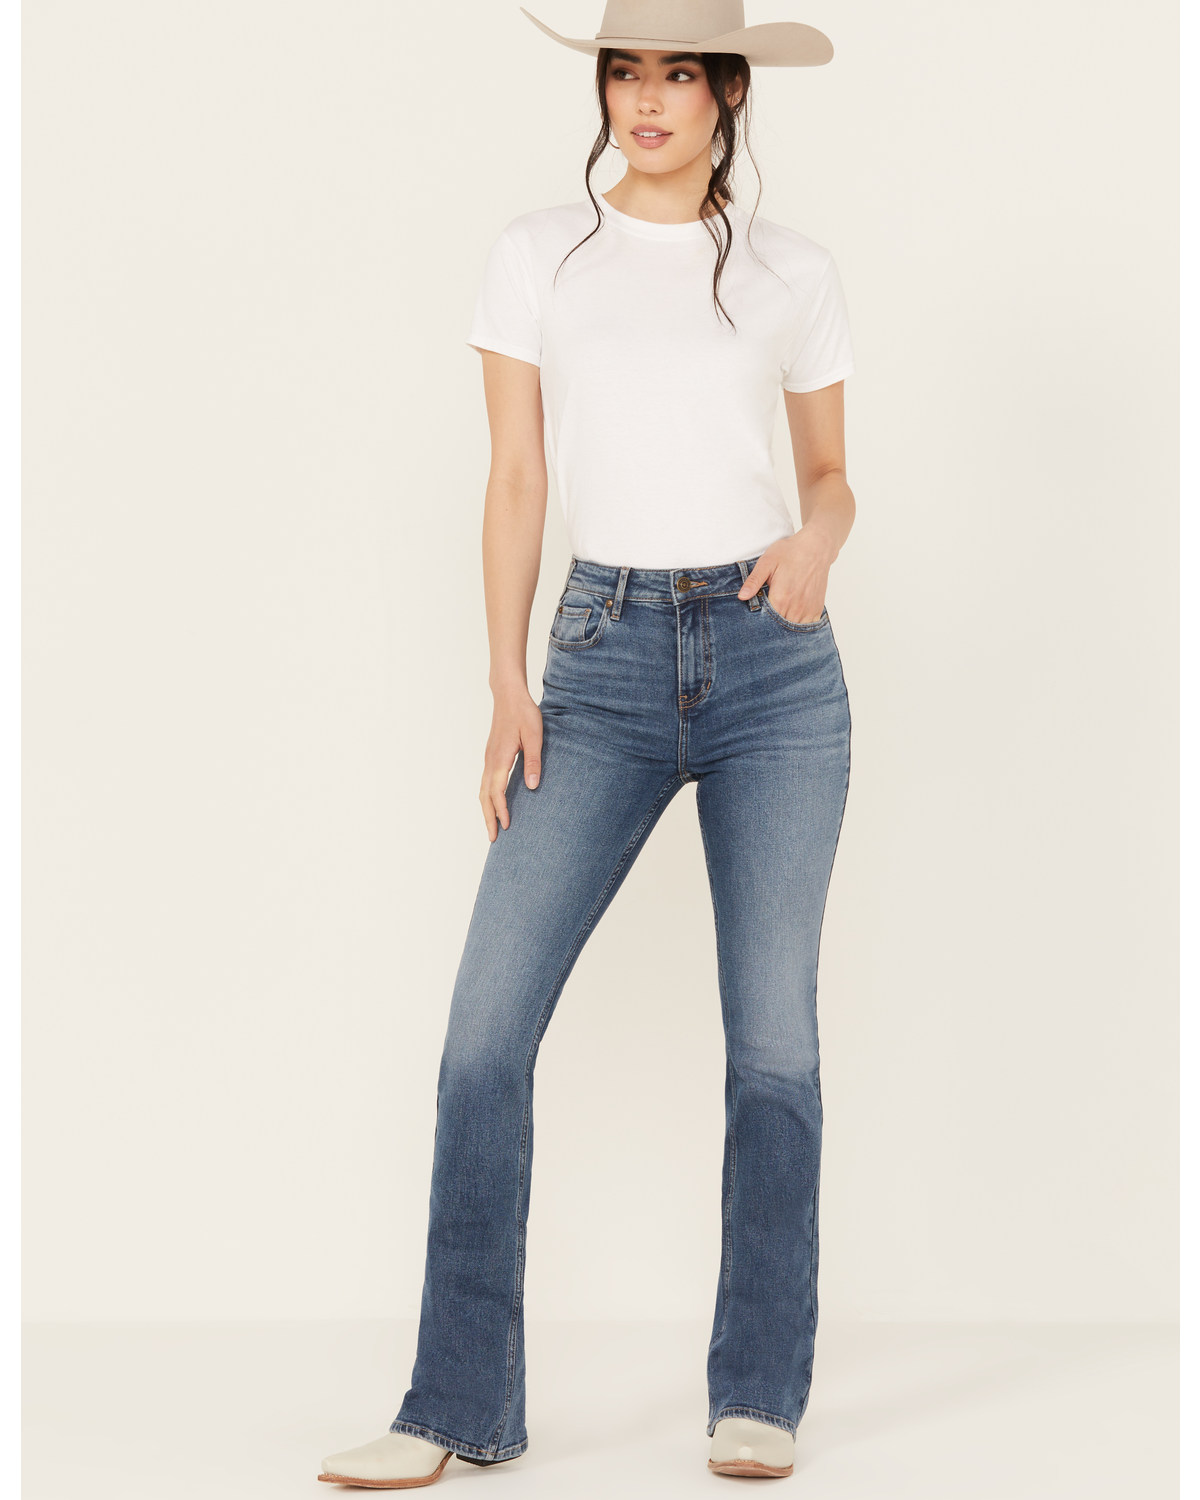 Cleo + Wolf Women's Juniper Medium Wash High Rise Slim Bootcut Jeans